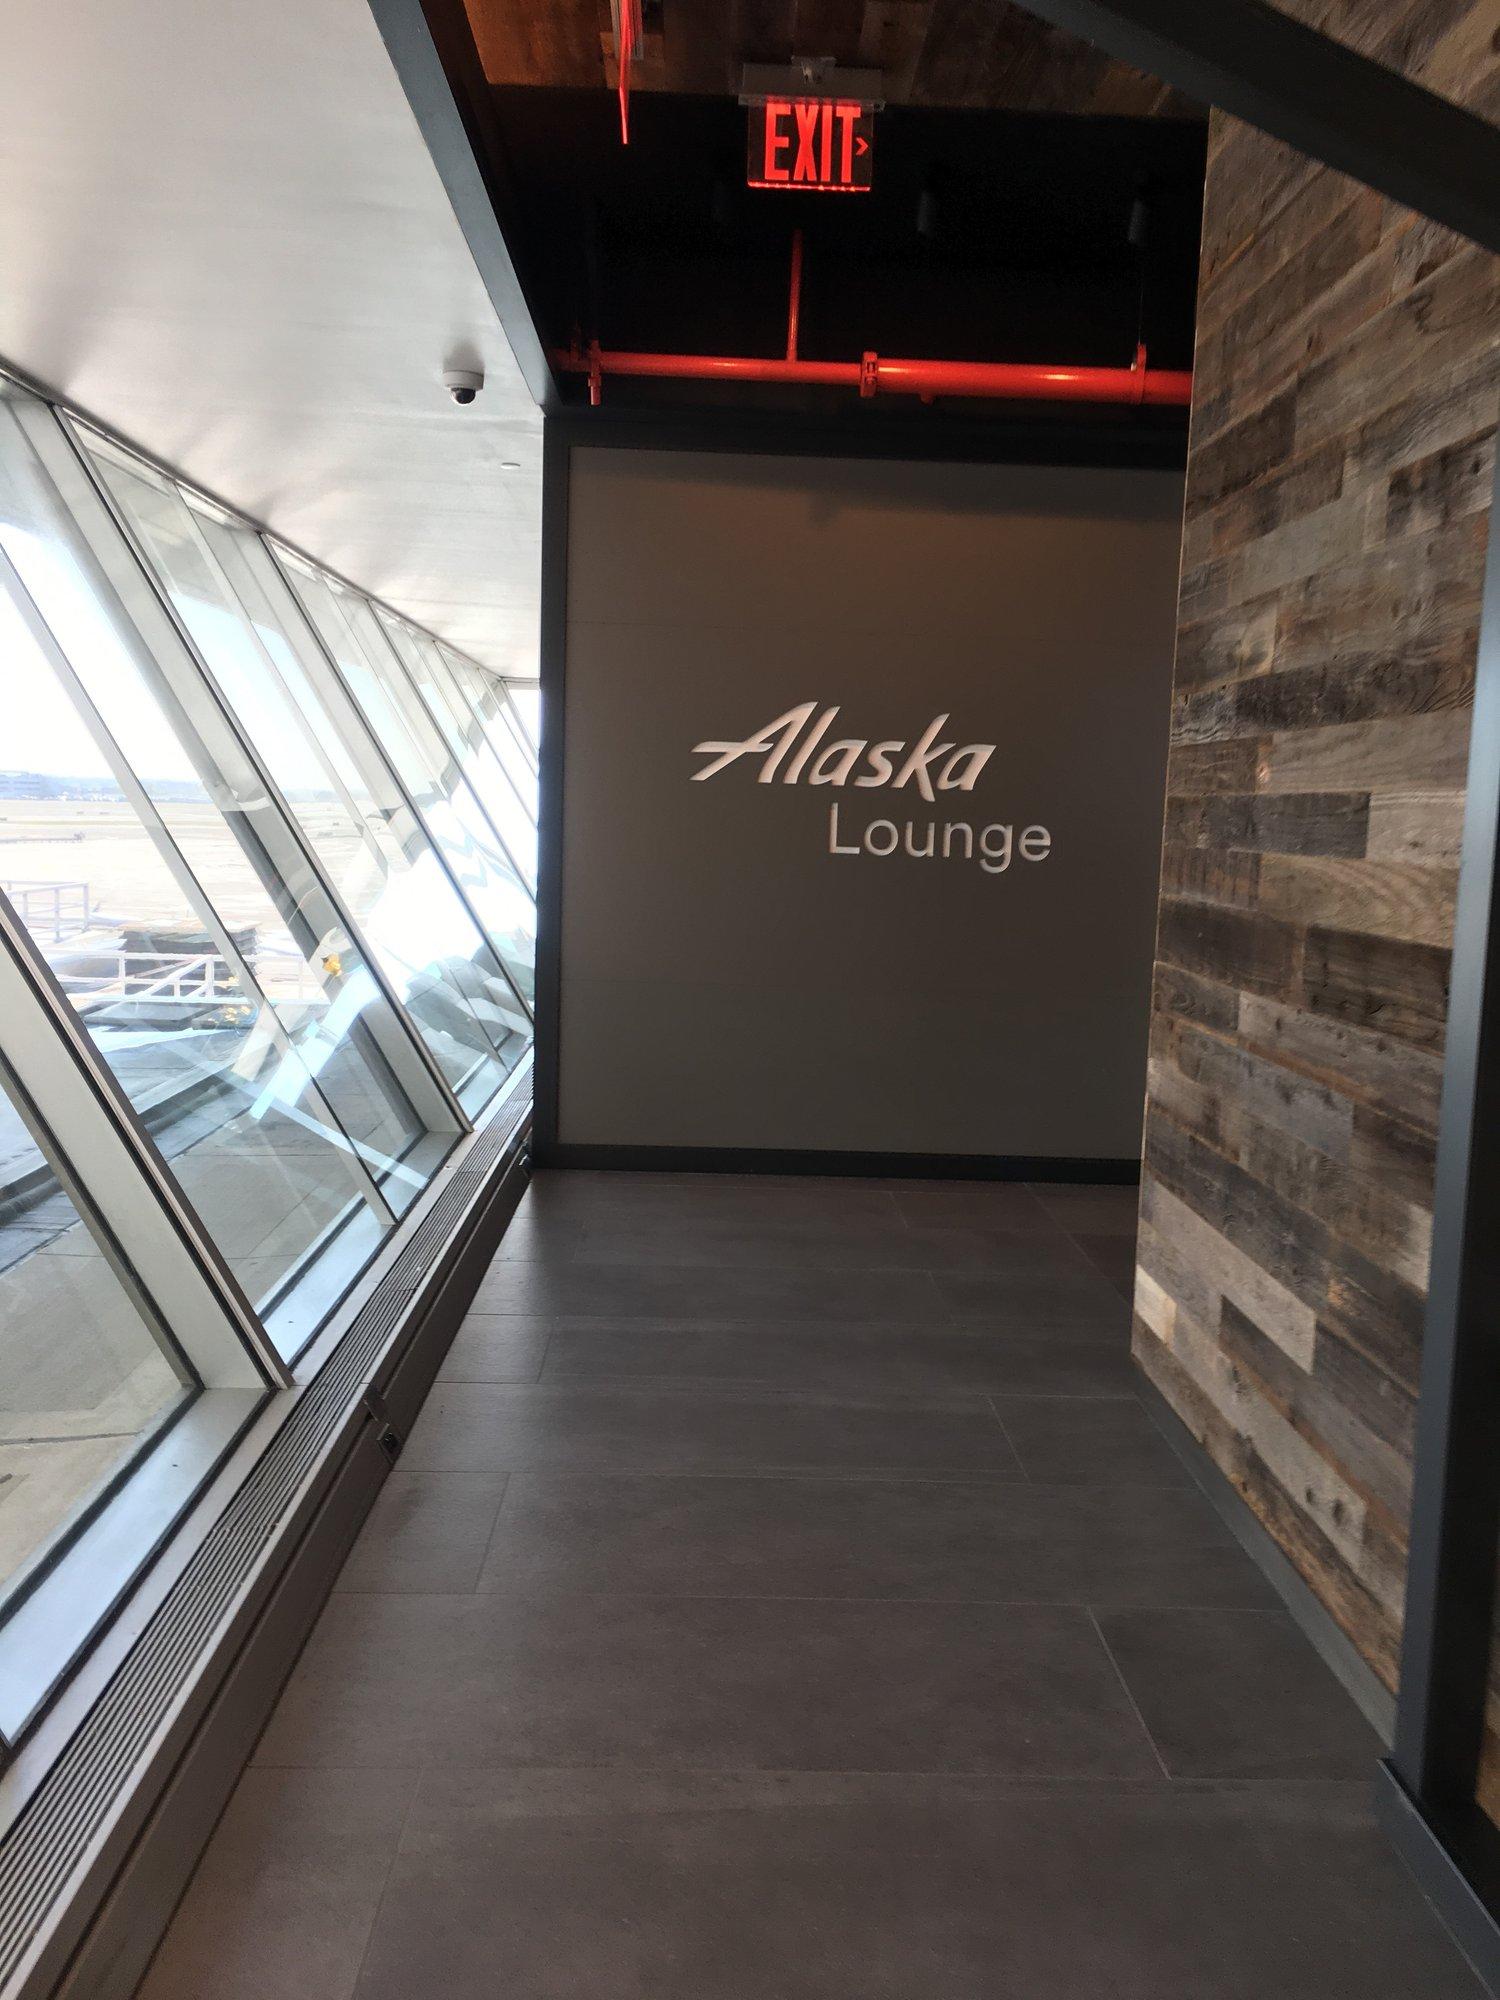 Alaska Airlines Alaska Lounge image 14 of 33